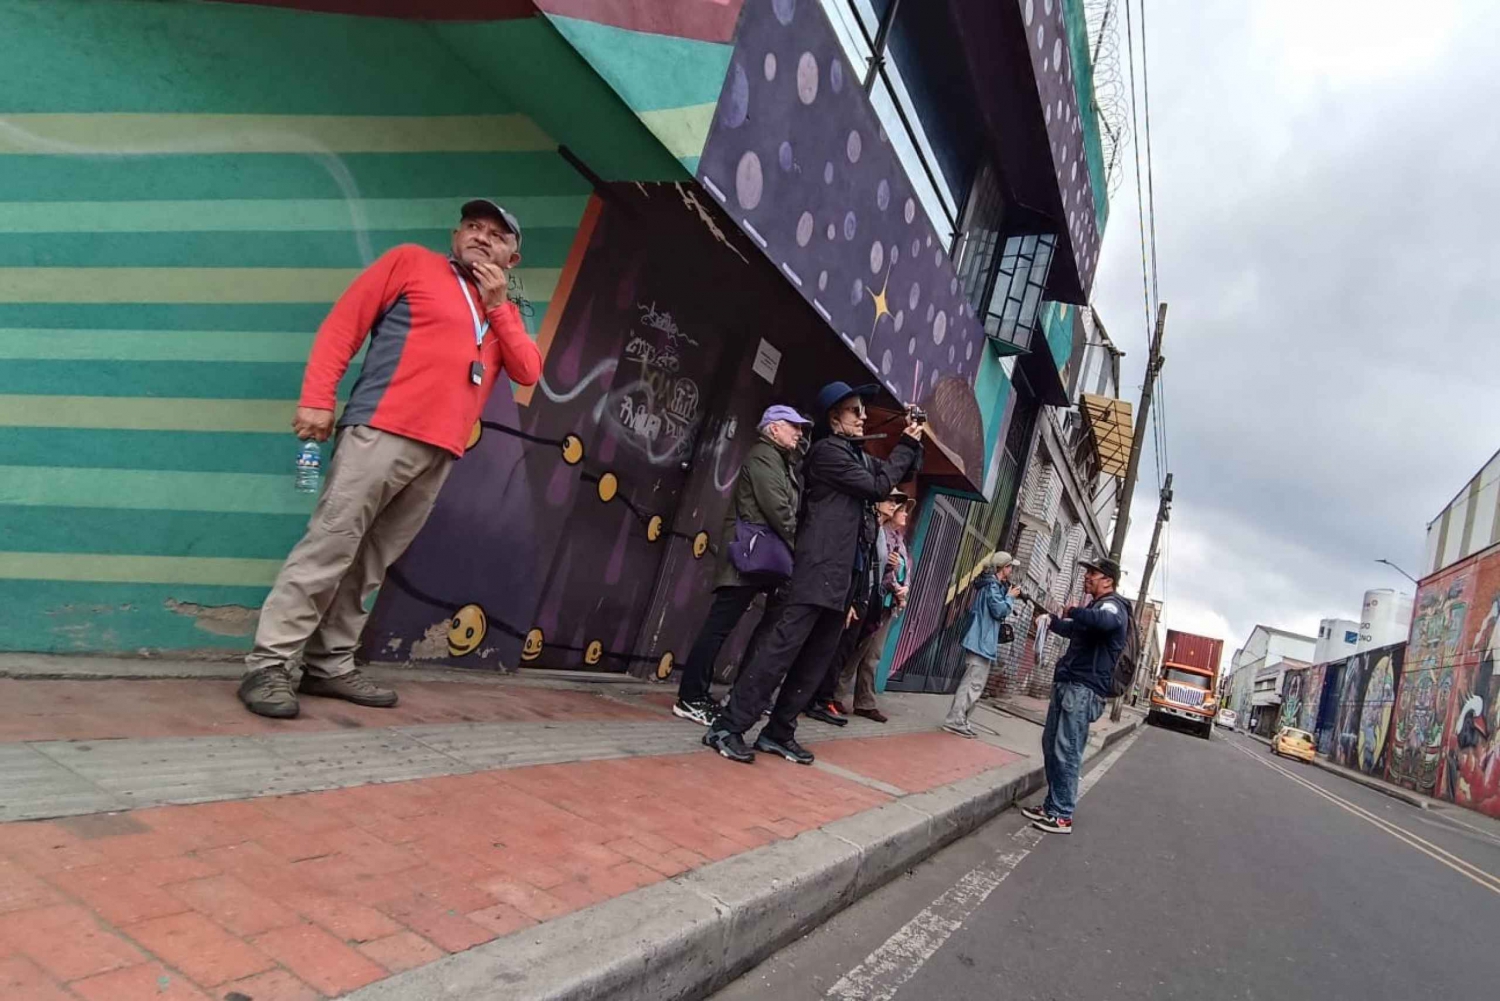 Walls of Wonder: Immersive Journey through Distrito Graffiti